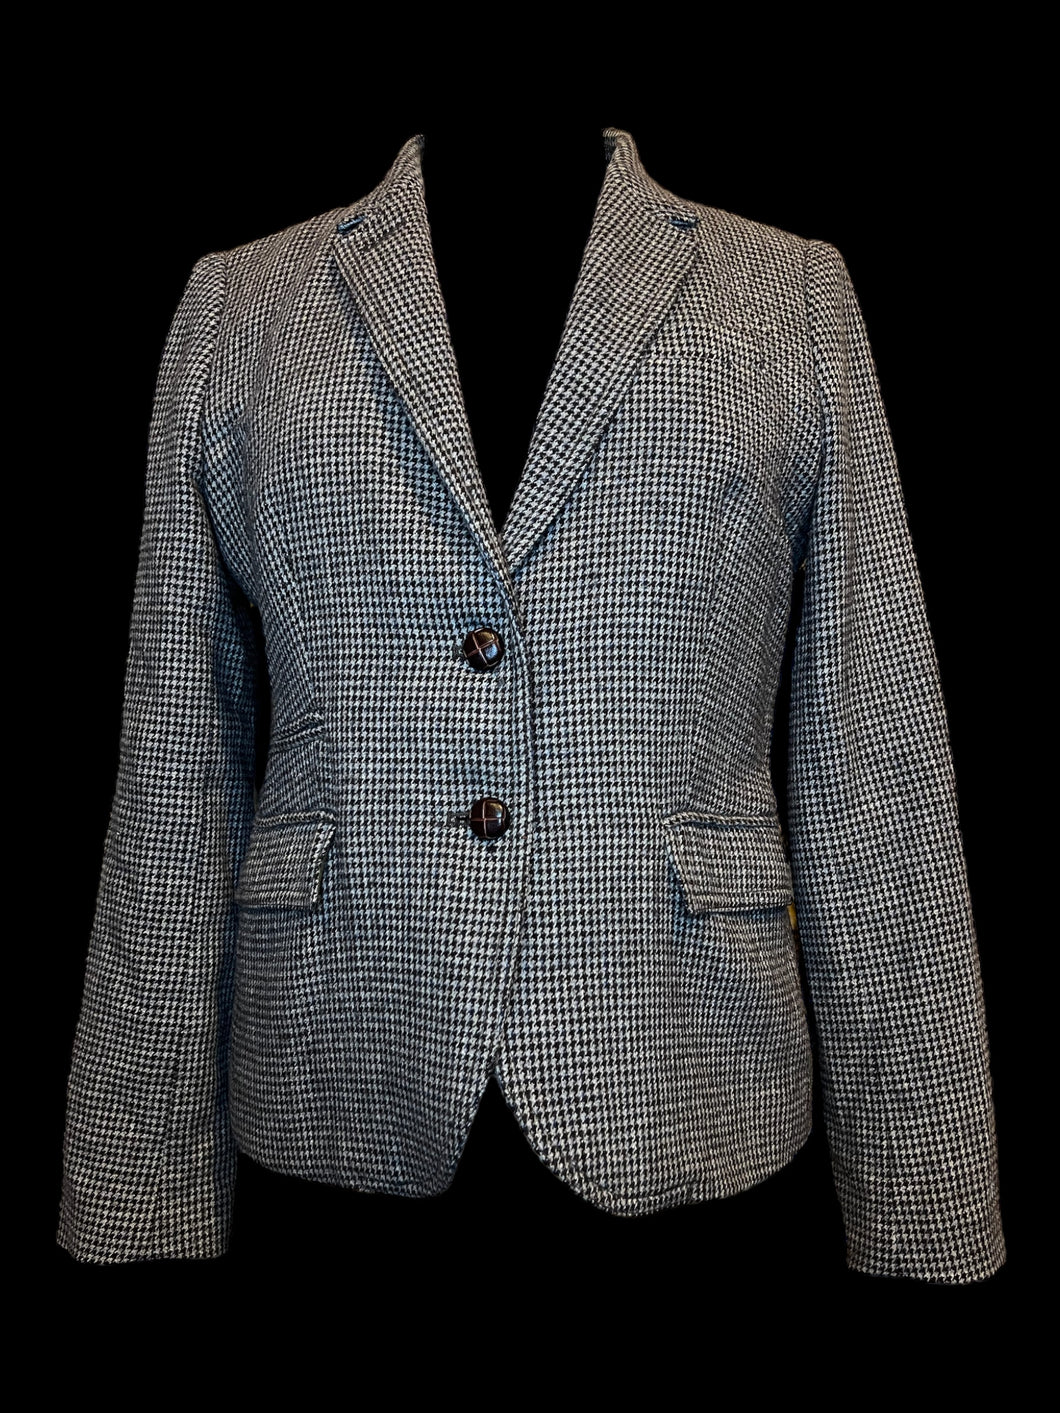 L Black & grey houndstooth single breasted button-up blazer w/ shoulder pads, pockets, & olive green lining